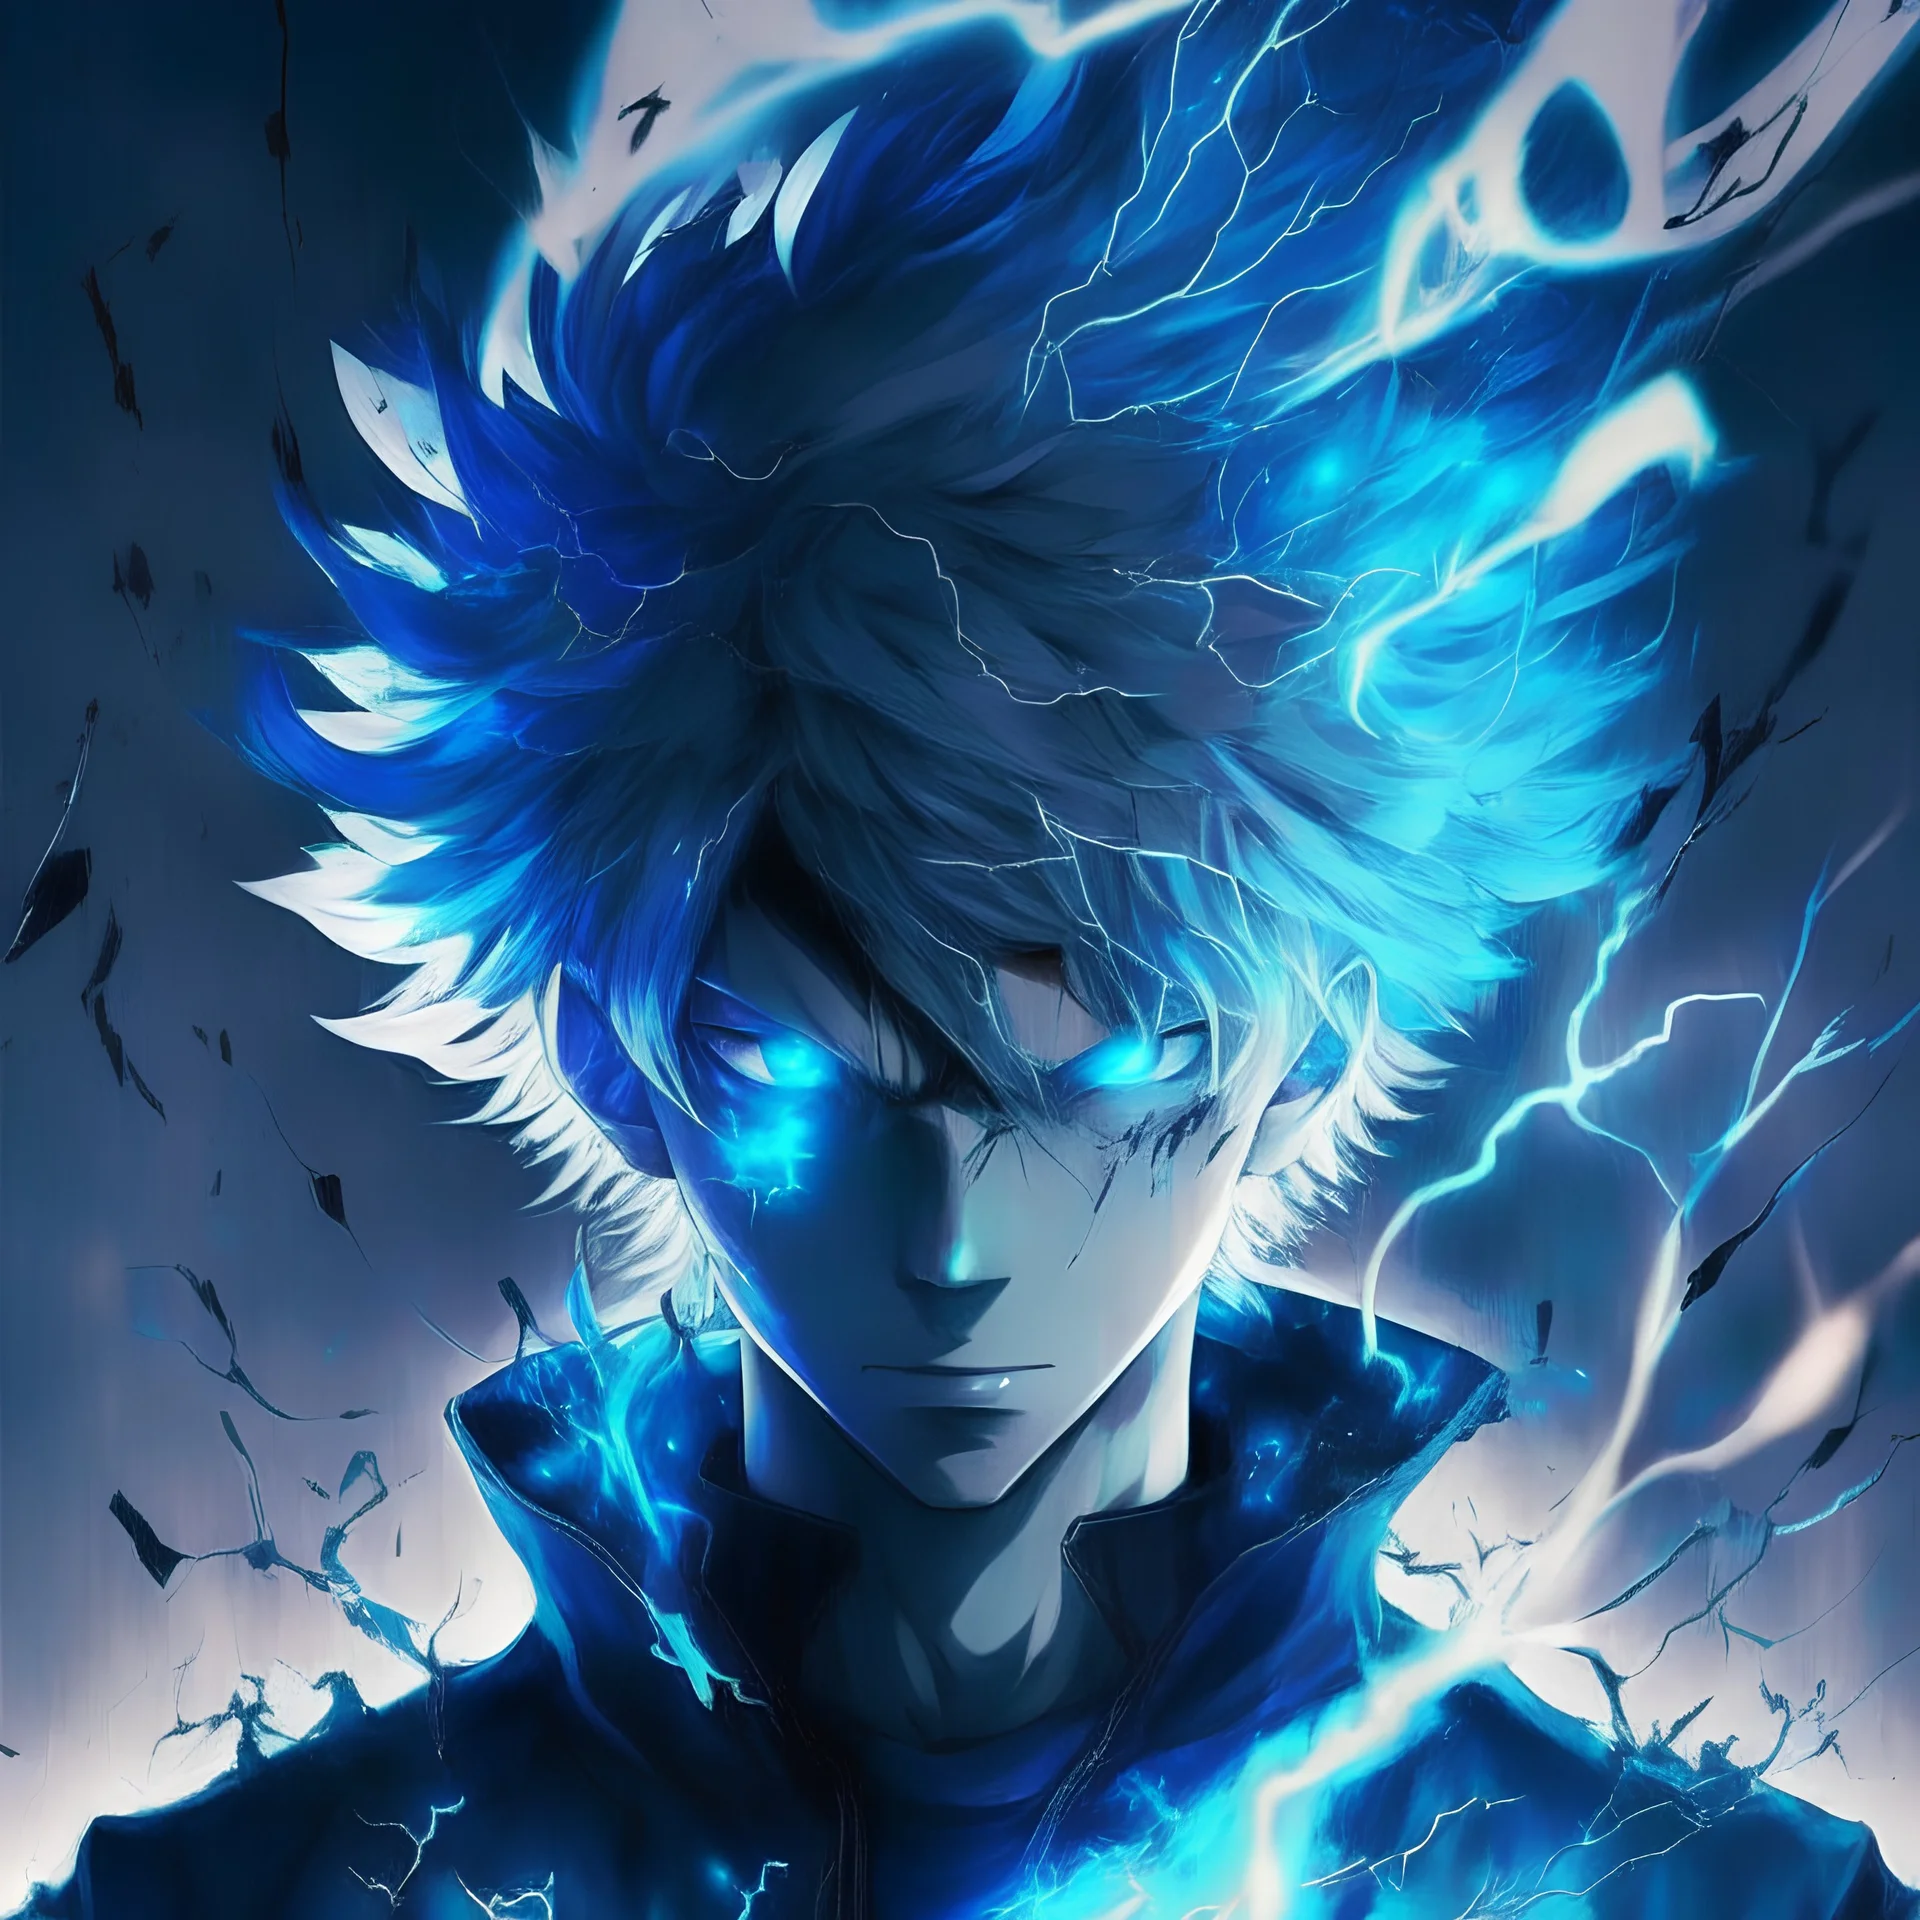 Lightning - Other & Anime Background Wallpapers on Desktop Nexus (Image  690536)